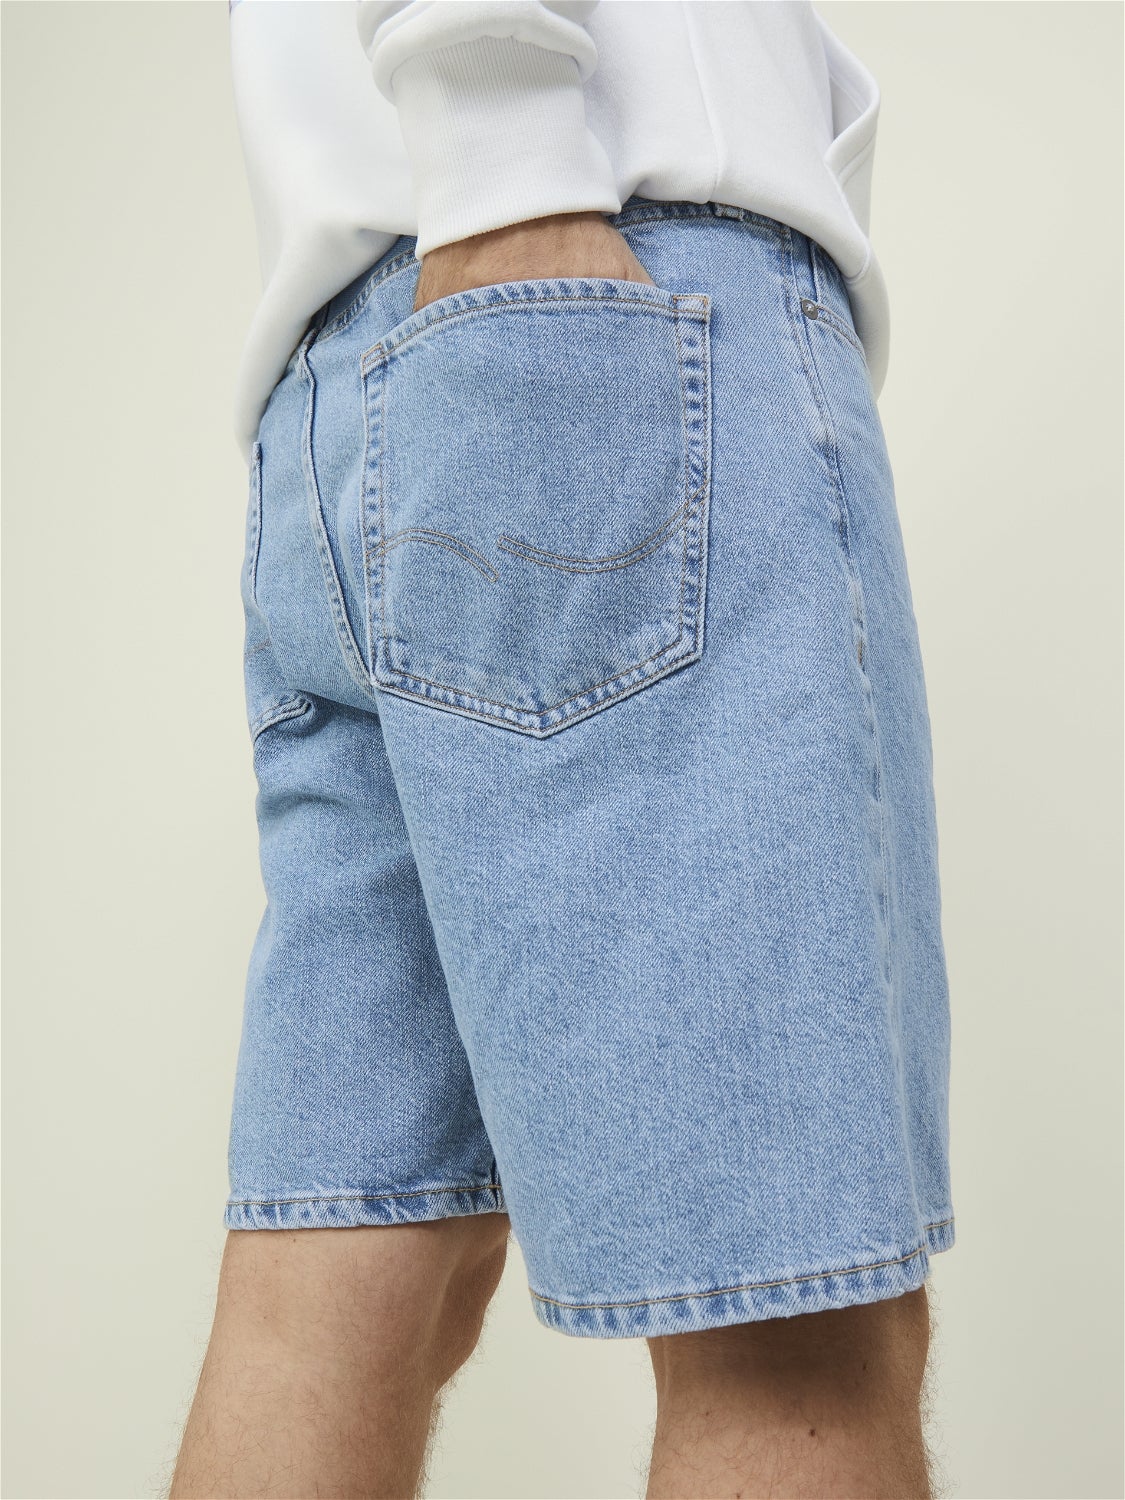 Mens Ripped Denim Shorts Jeans Distressed Summer Beach Solid Slim Short  Pants | eBay